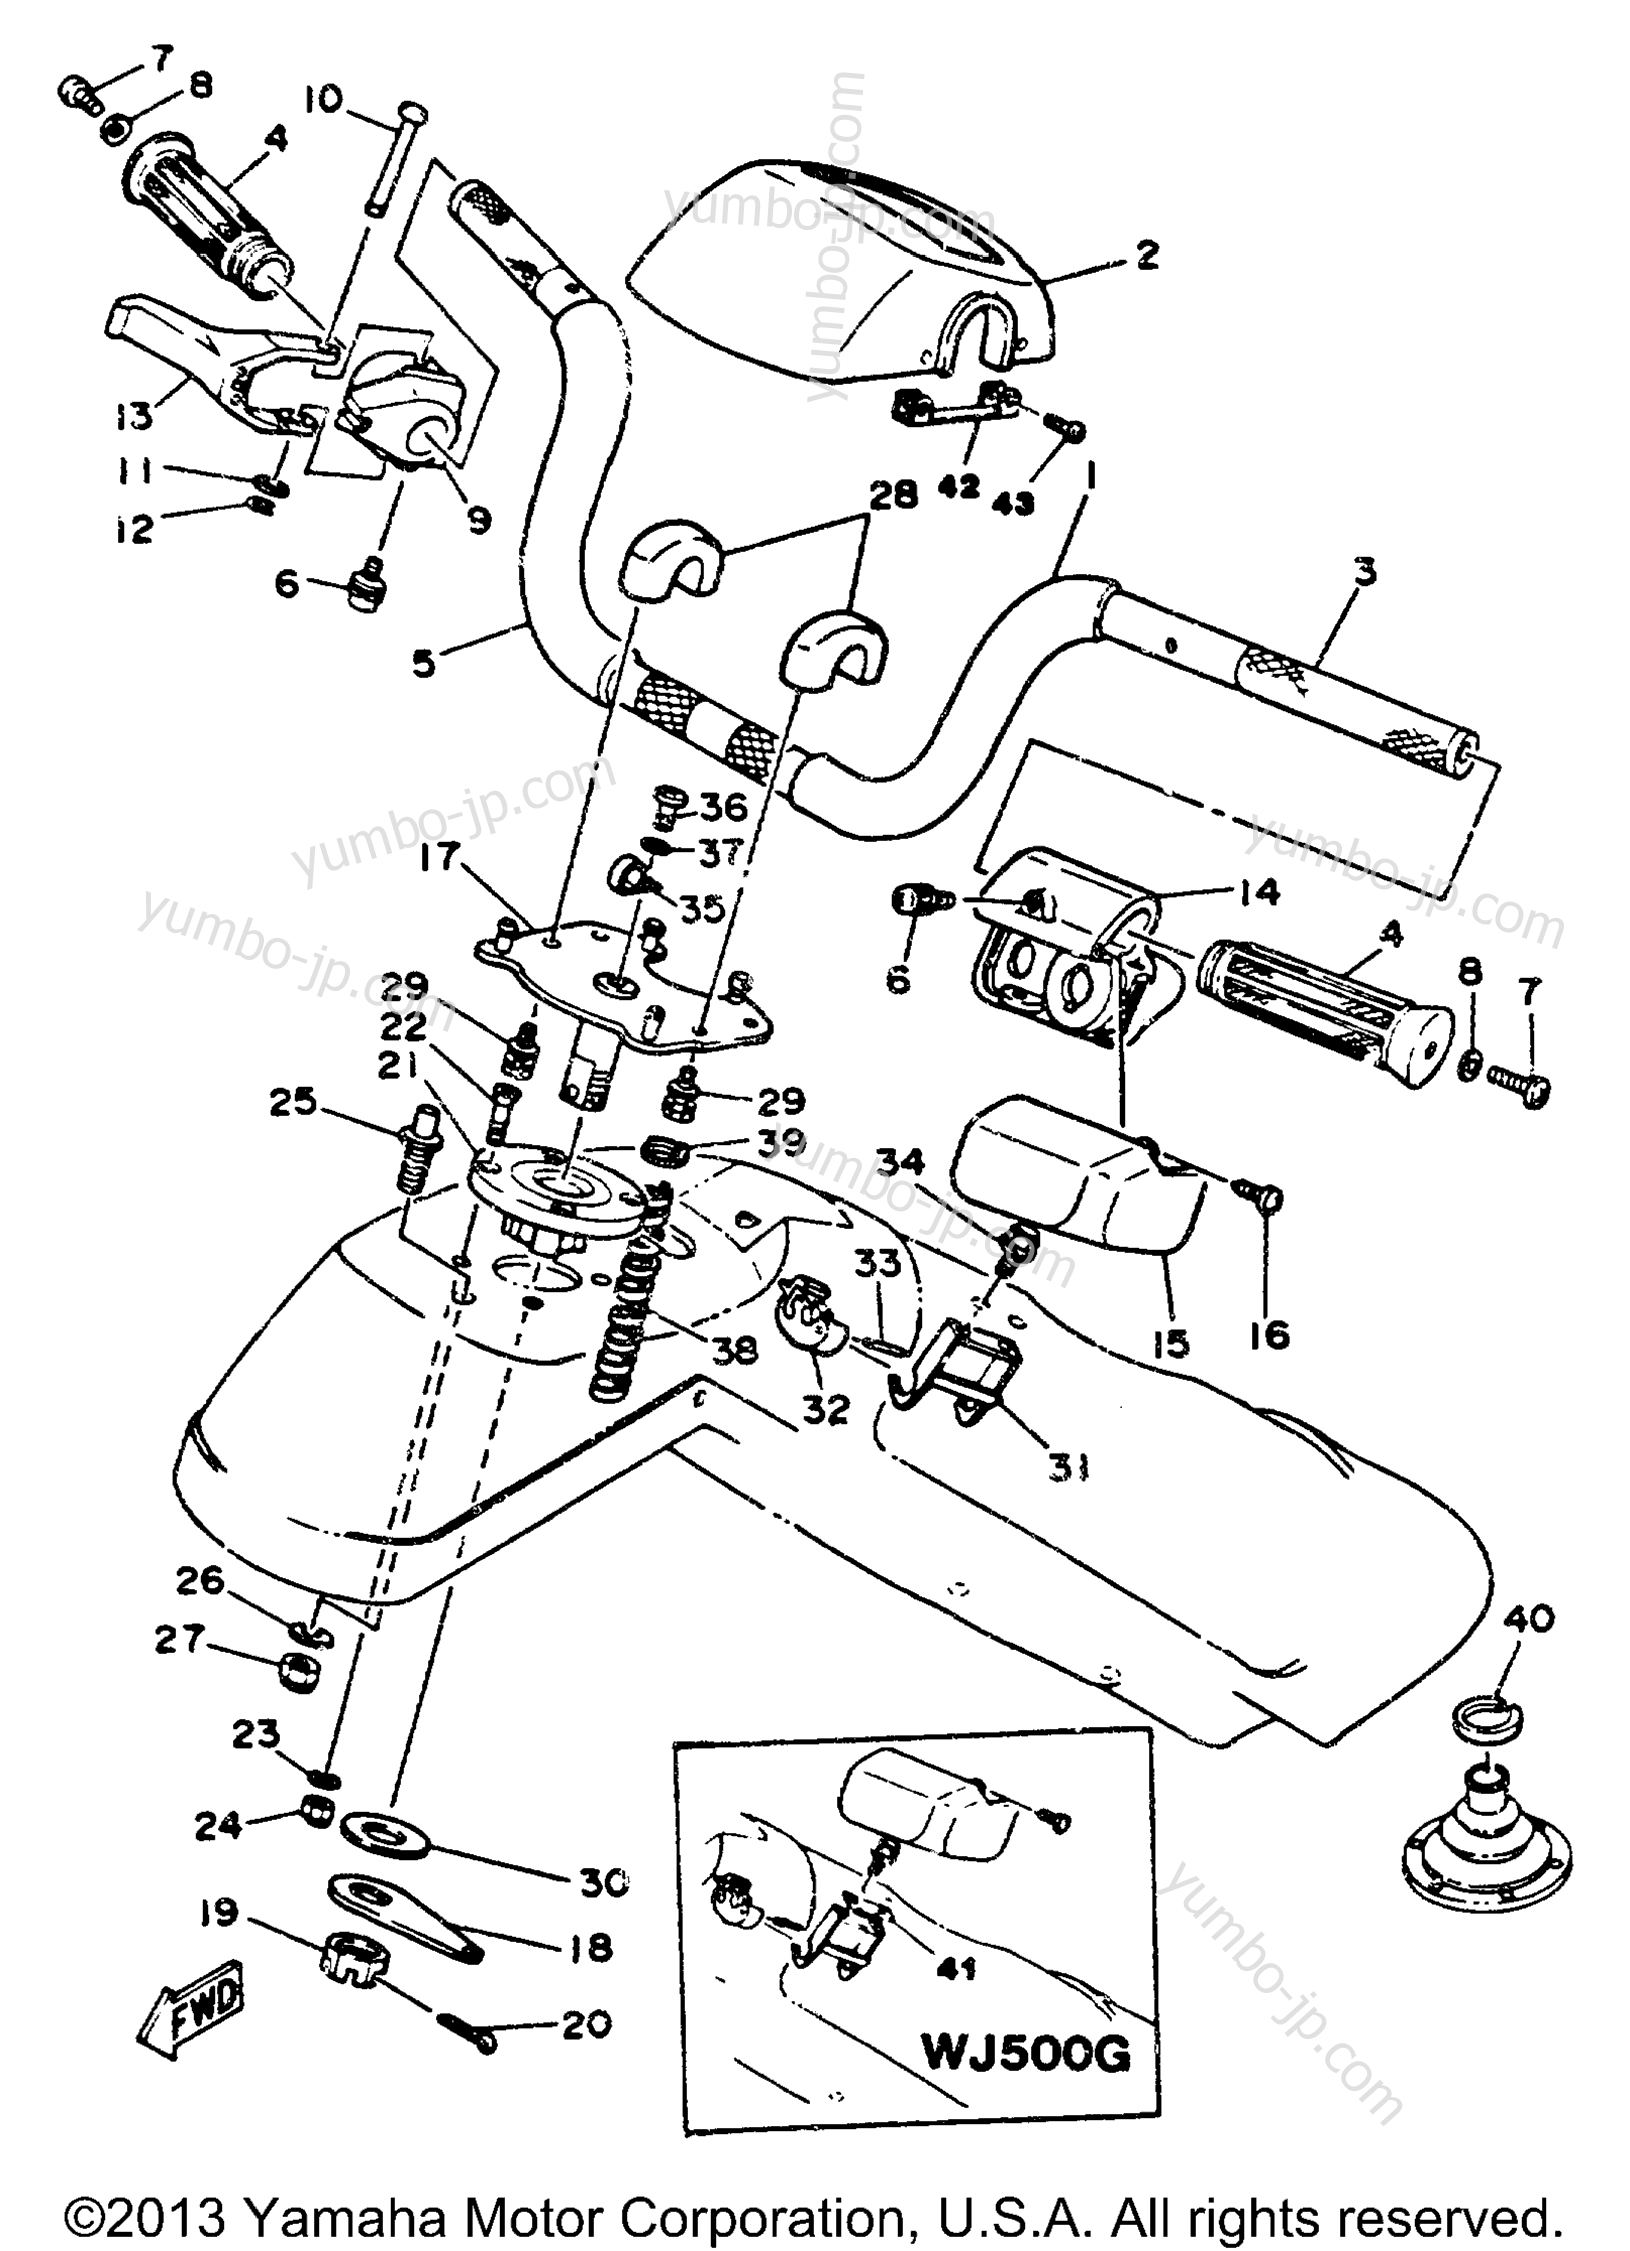 Steering для гидроциклов YAMAHA WAVE JAMMER (WJ500G) 1988 г.